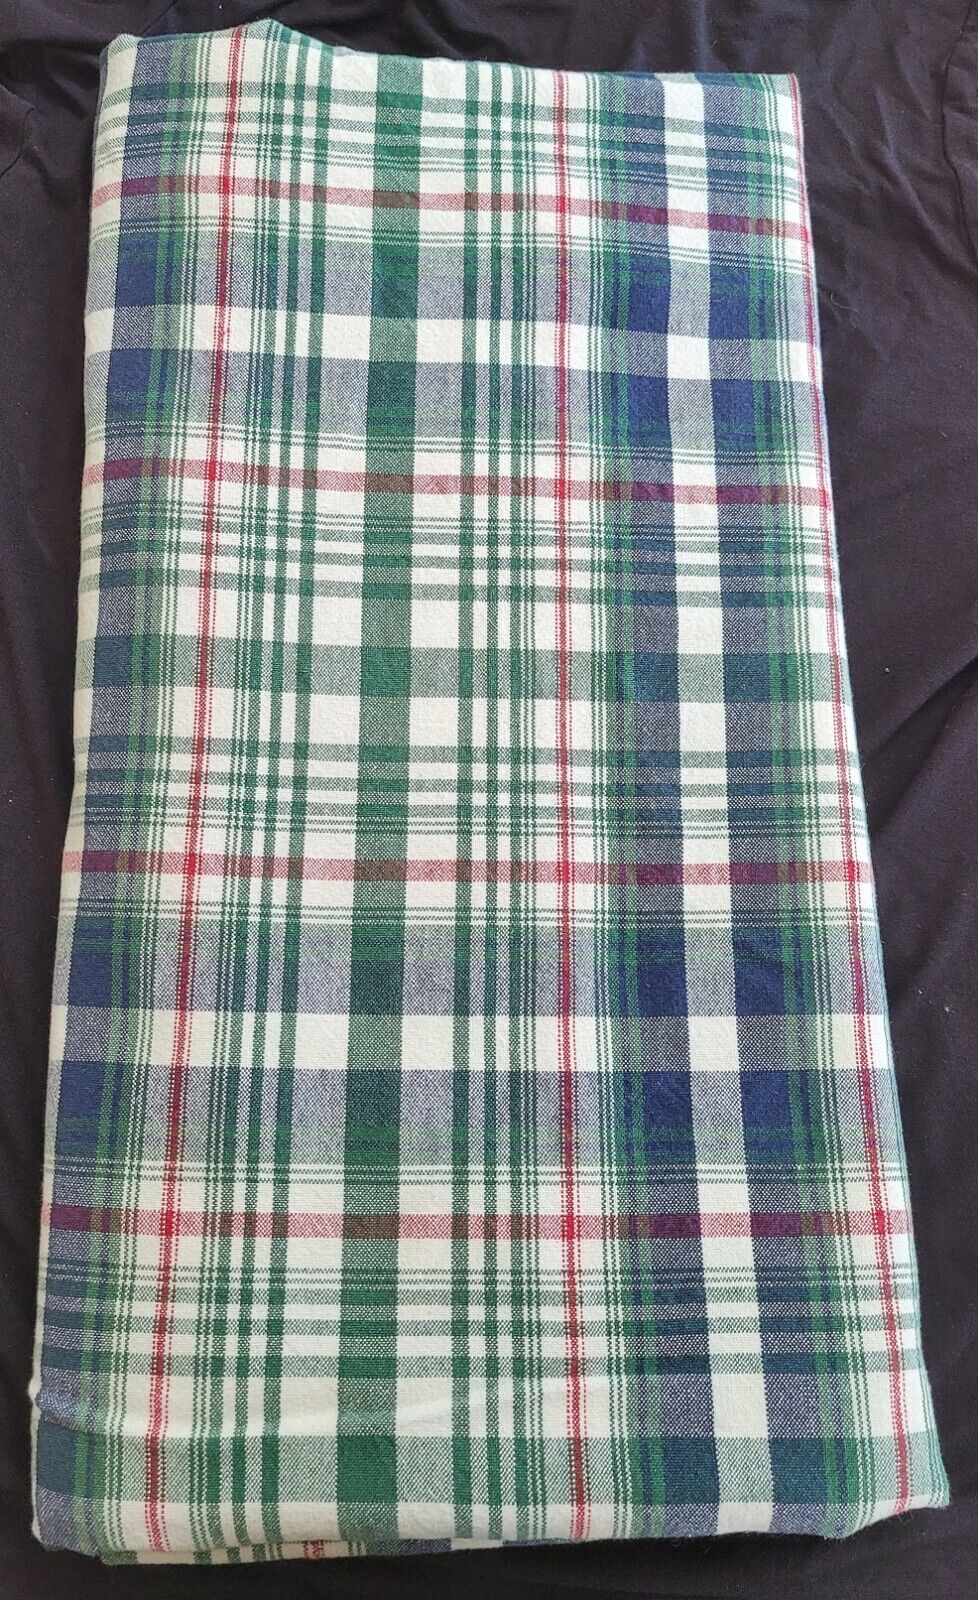 Liz Claiborne Vintage Tablecloth 2001 Check Pattern Oblong 74x55 Approximately 